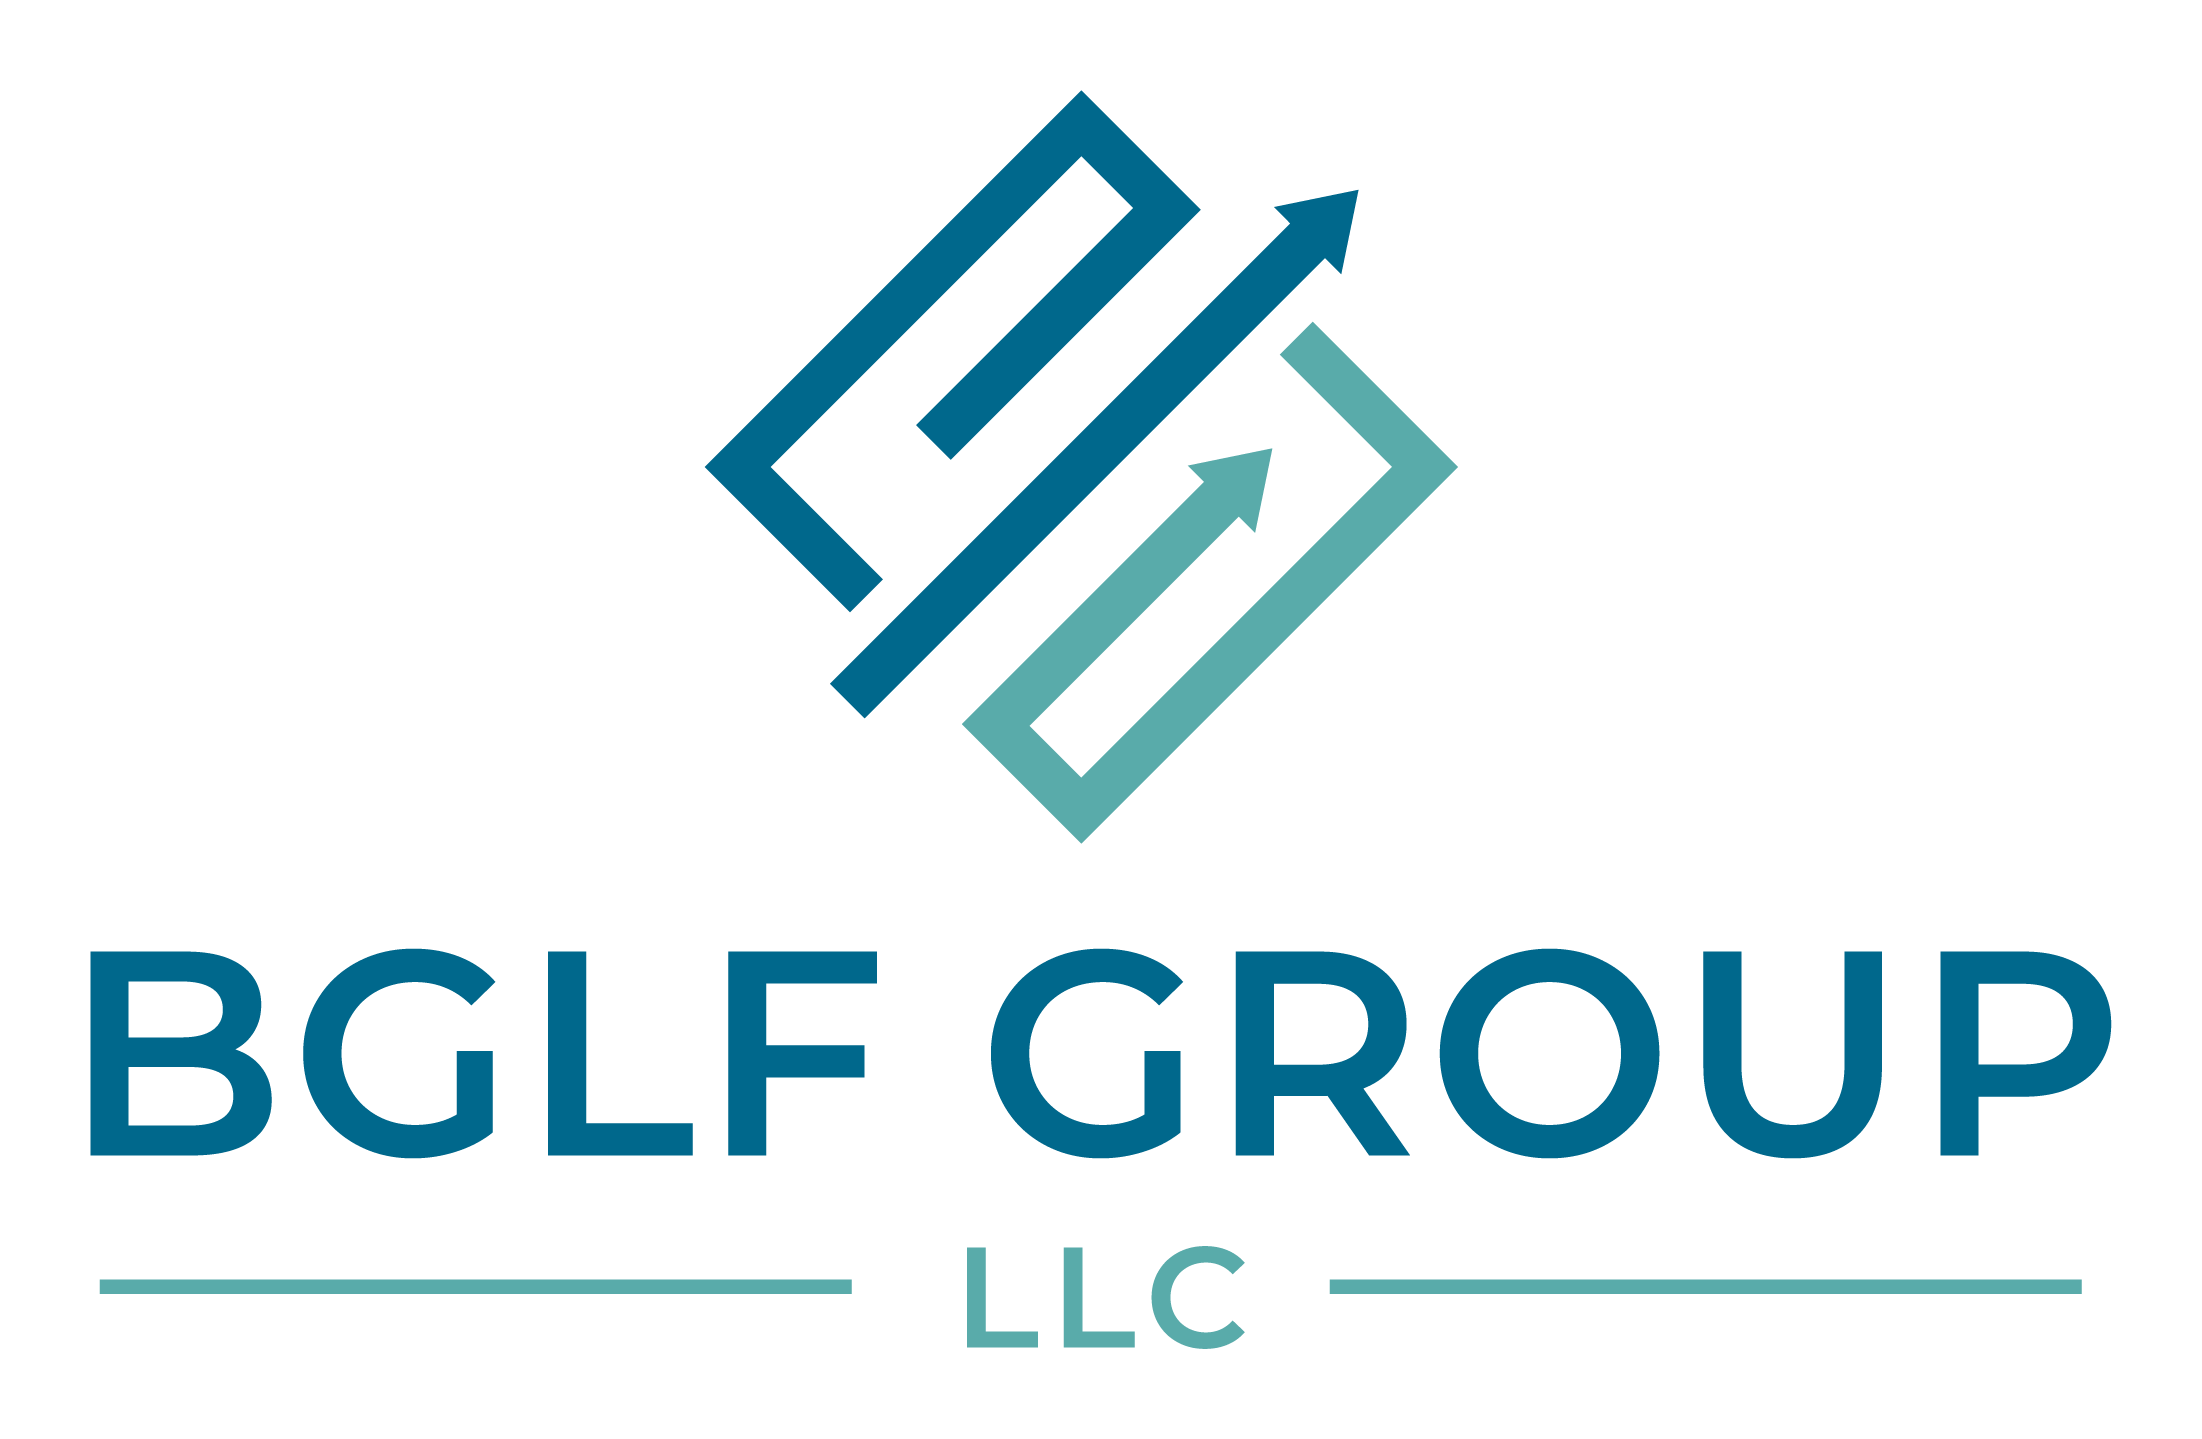 THE BGLF GROUP, LLC